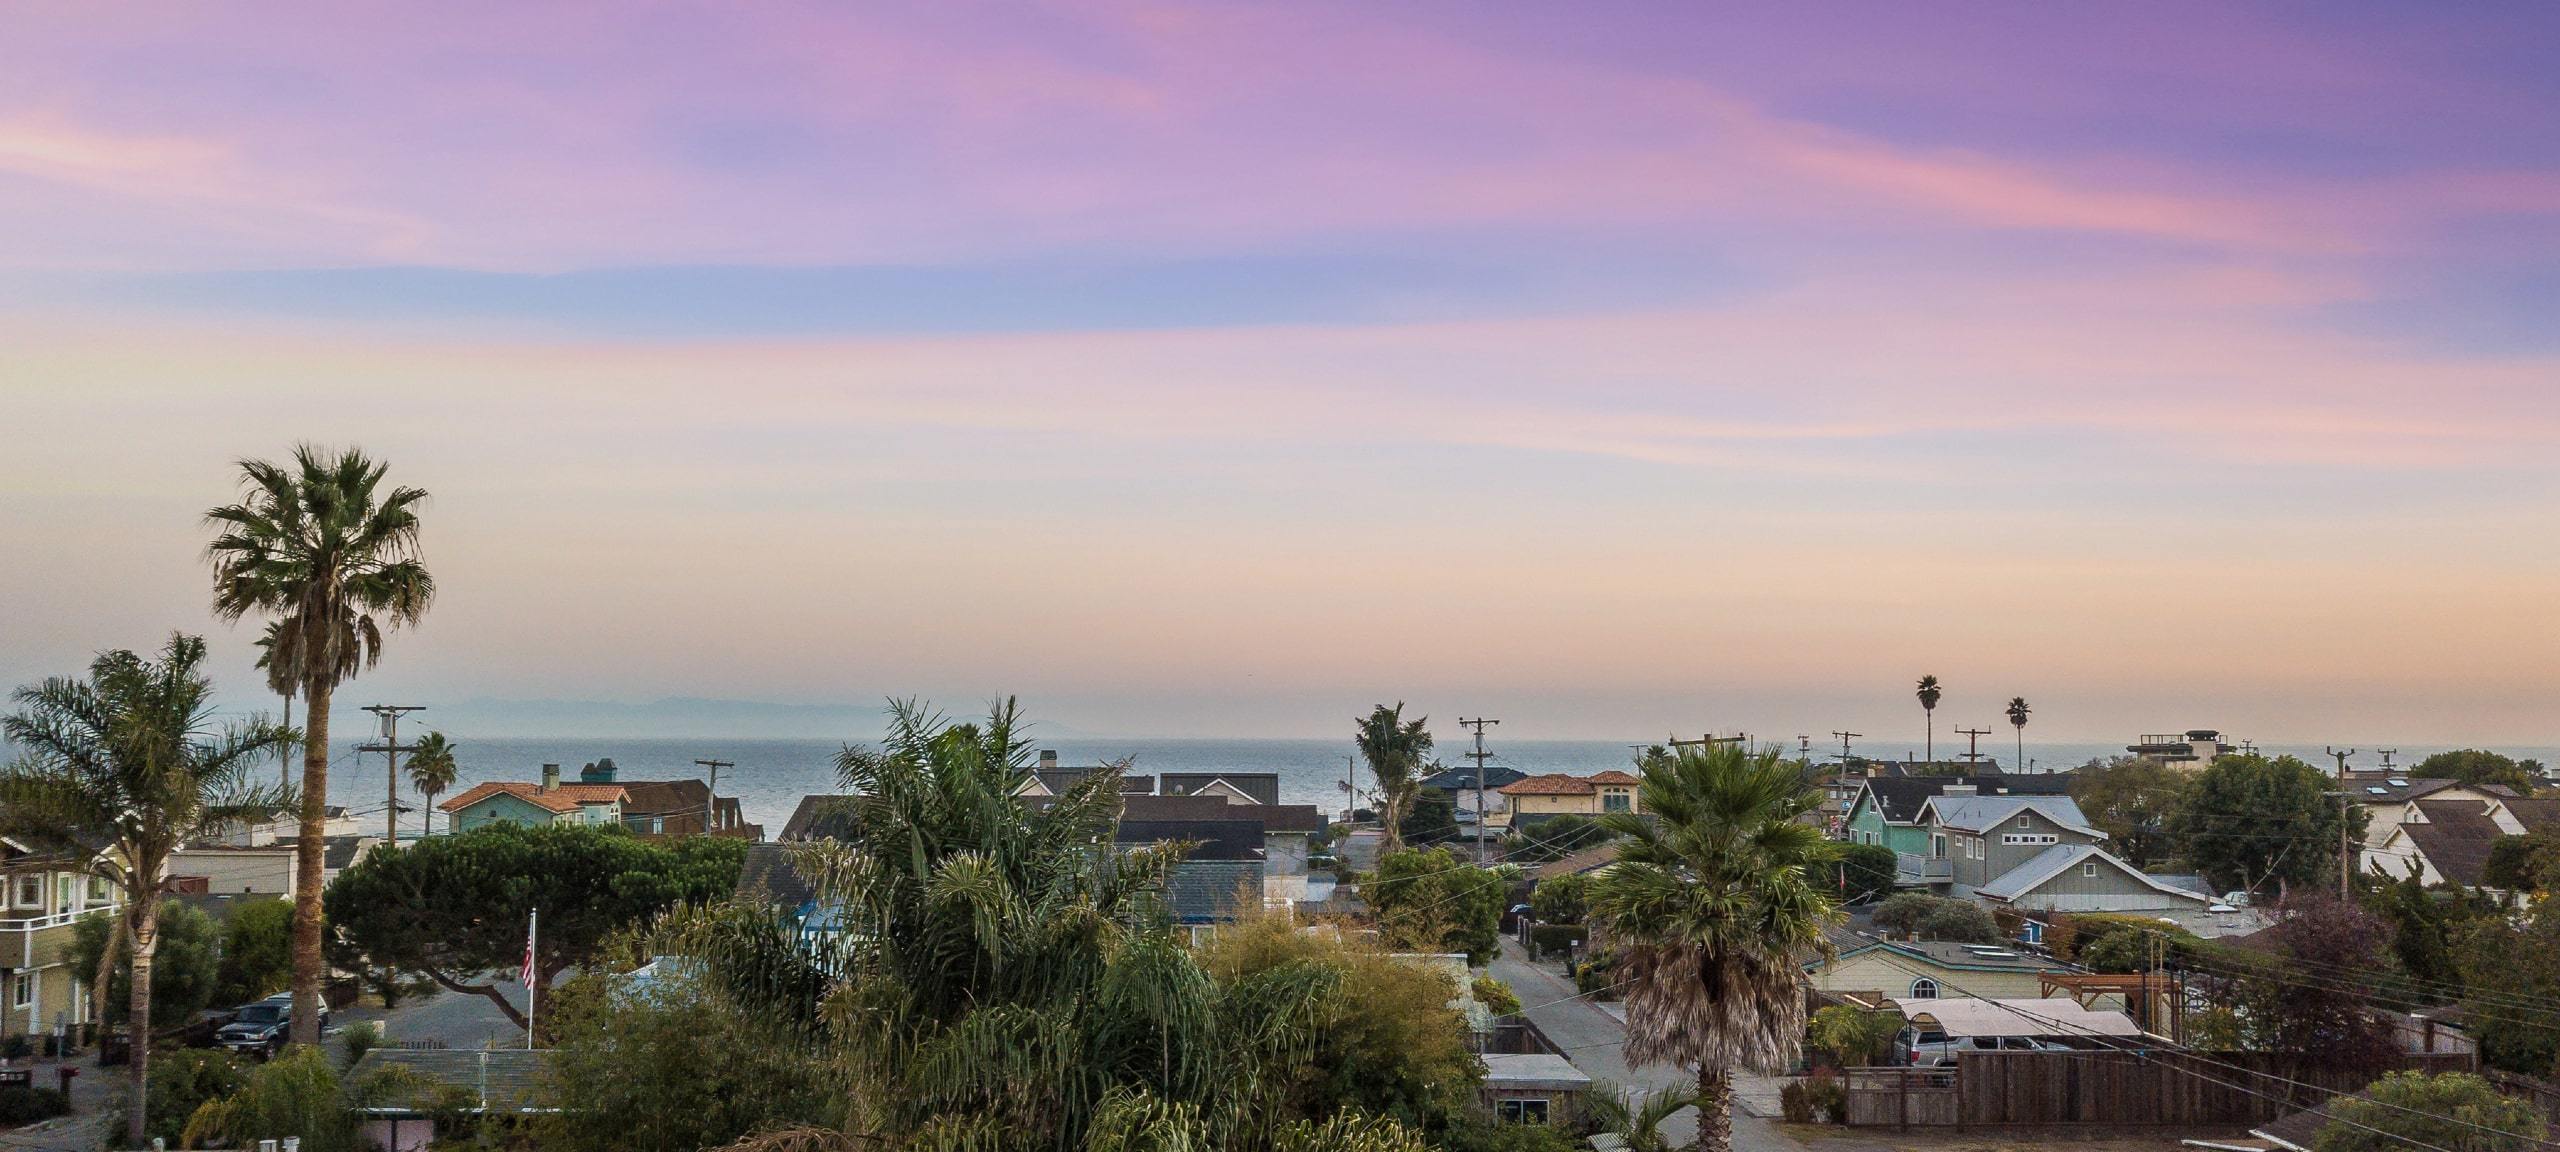 Purple sunset over residential, waterfront area in Santa Cruz, CA